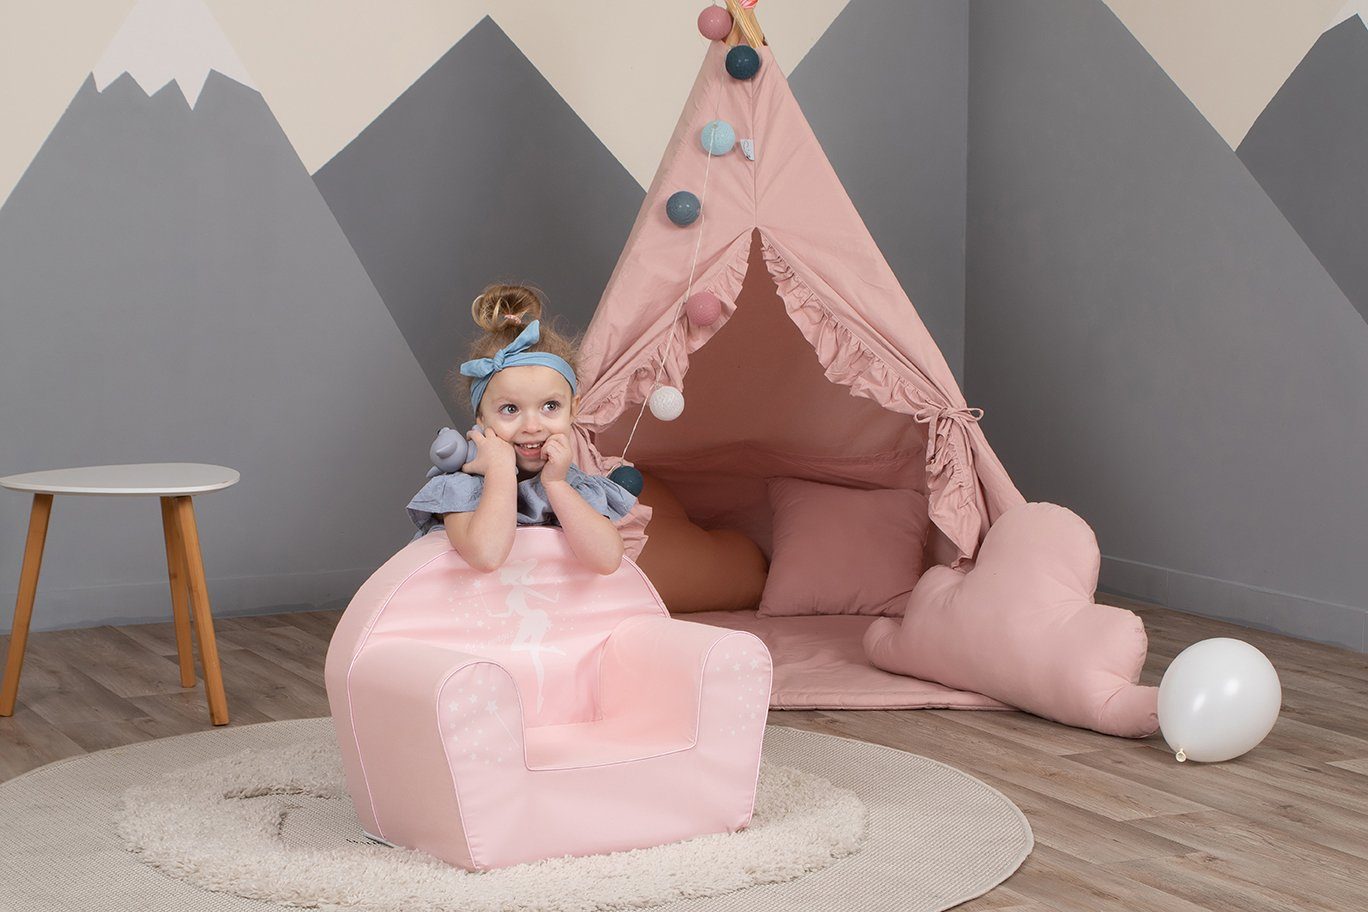 Knorrtoys® Sessel für Kinder; Fairy in Pink, Europe Made